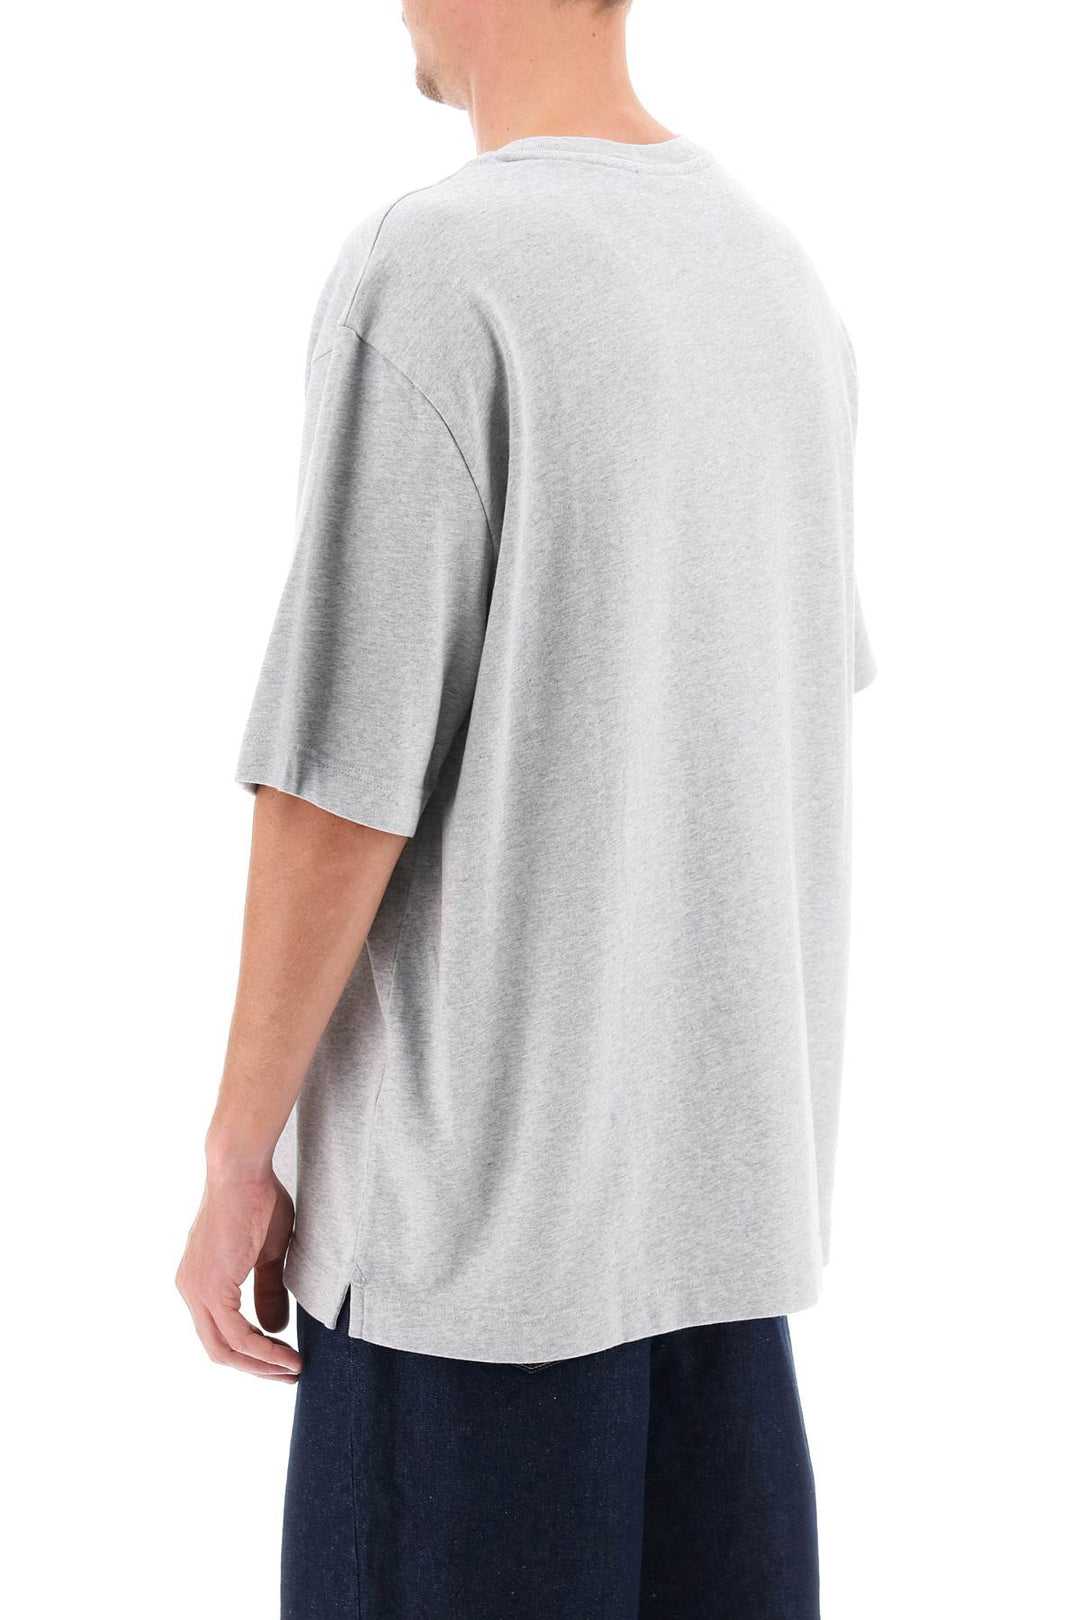 Maxi T Shirt Ivy League - Maison Kitsune - Uomo